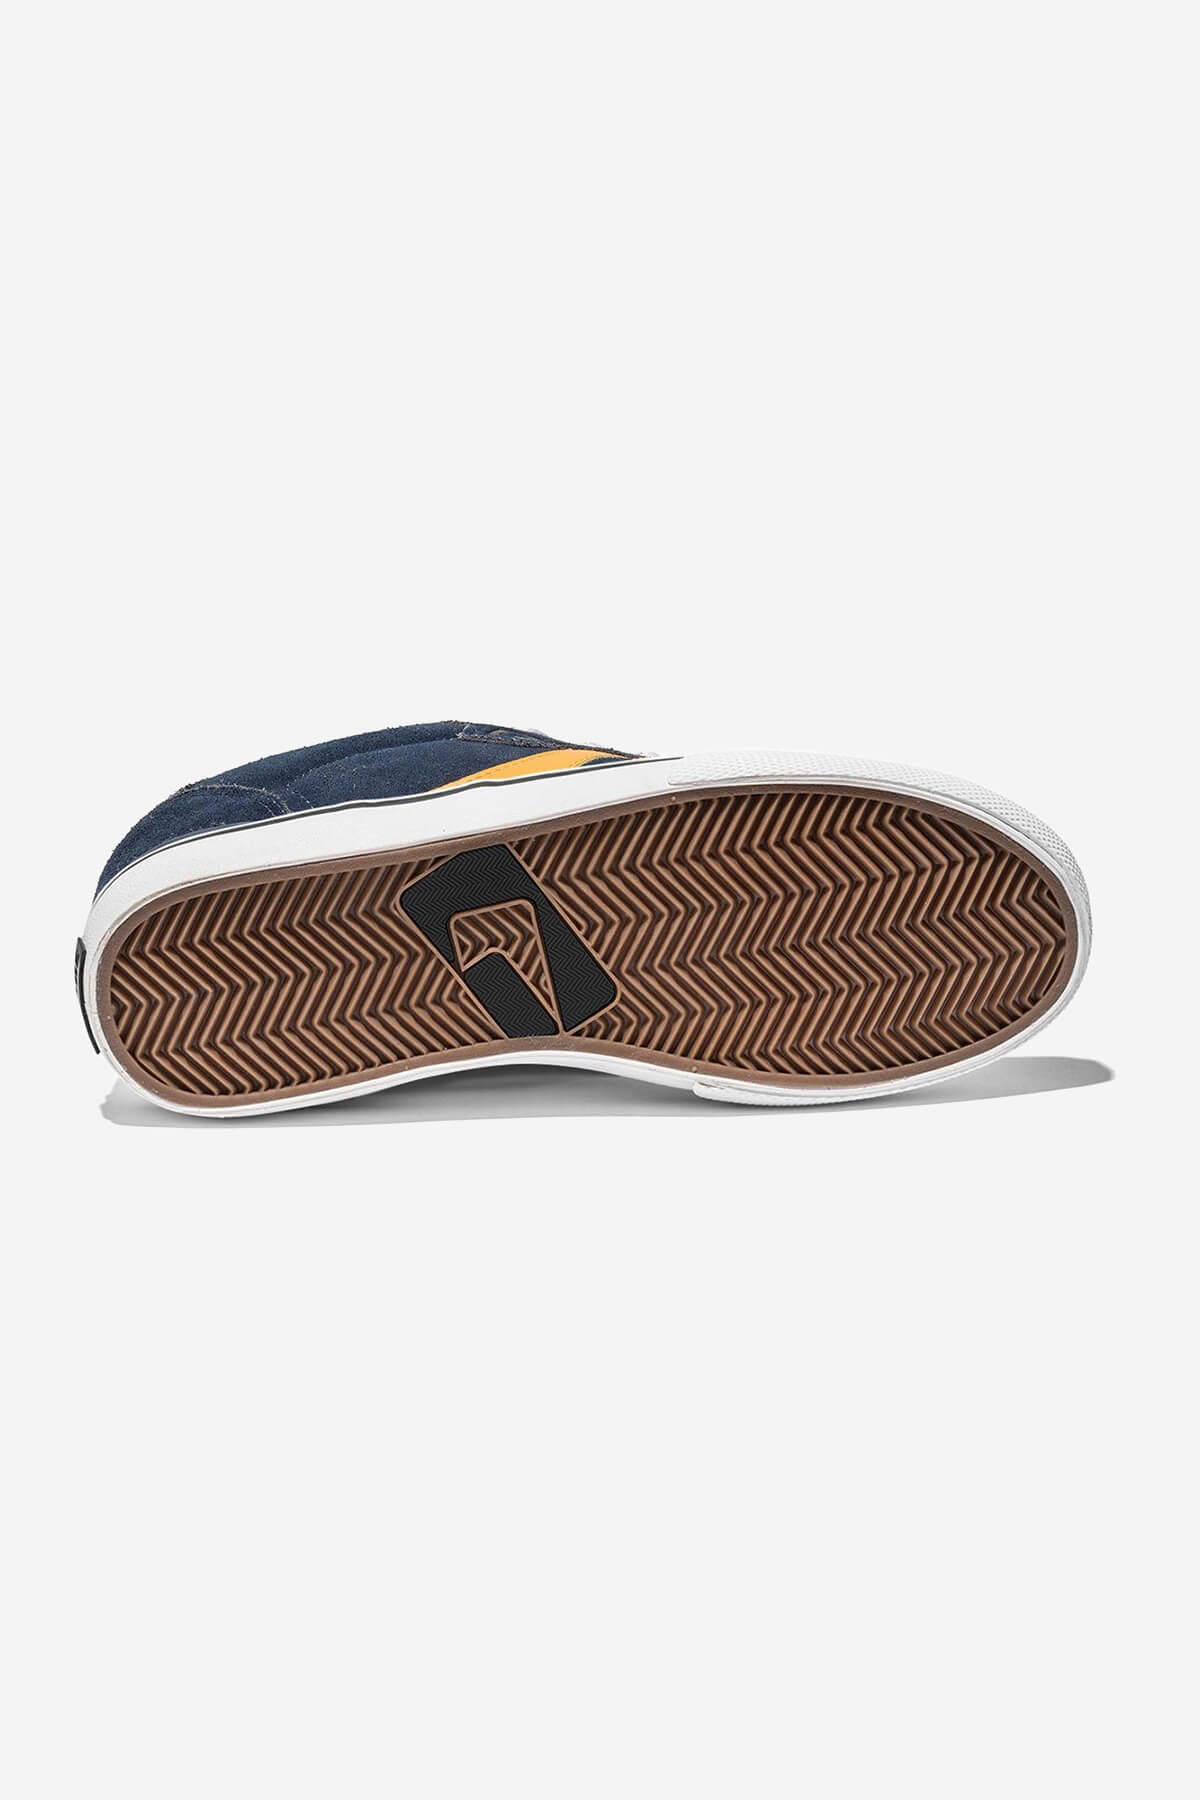 Globe - Encore 2 - Navy/Yellow - skateboard Chaussures